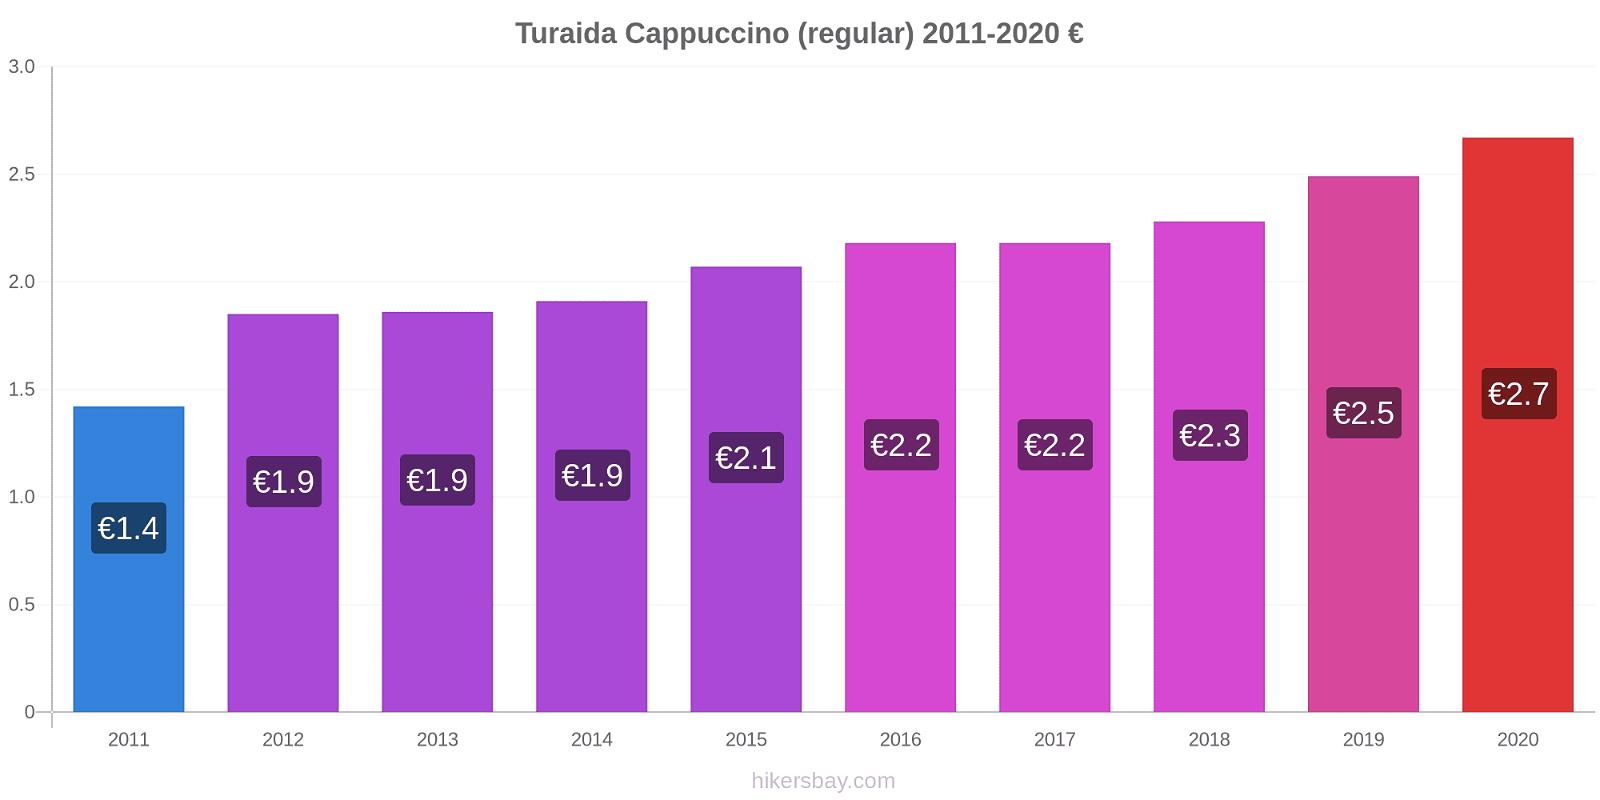 Turaida price changes Cappuccino (regular) hikersbay.com